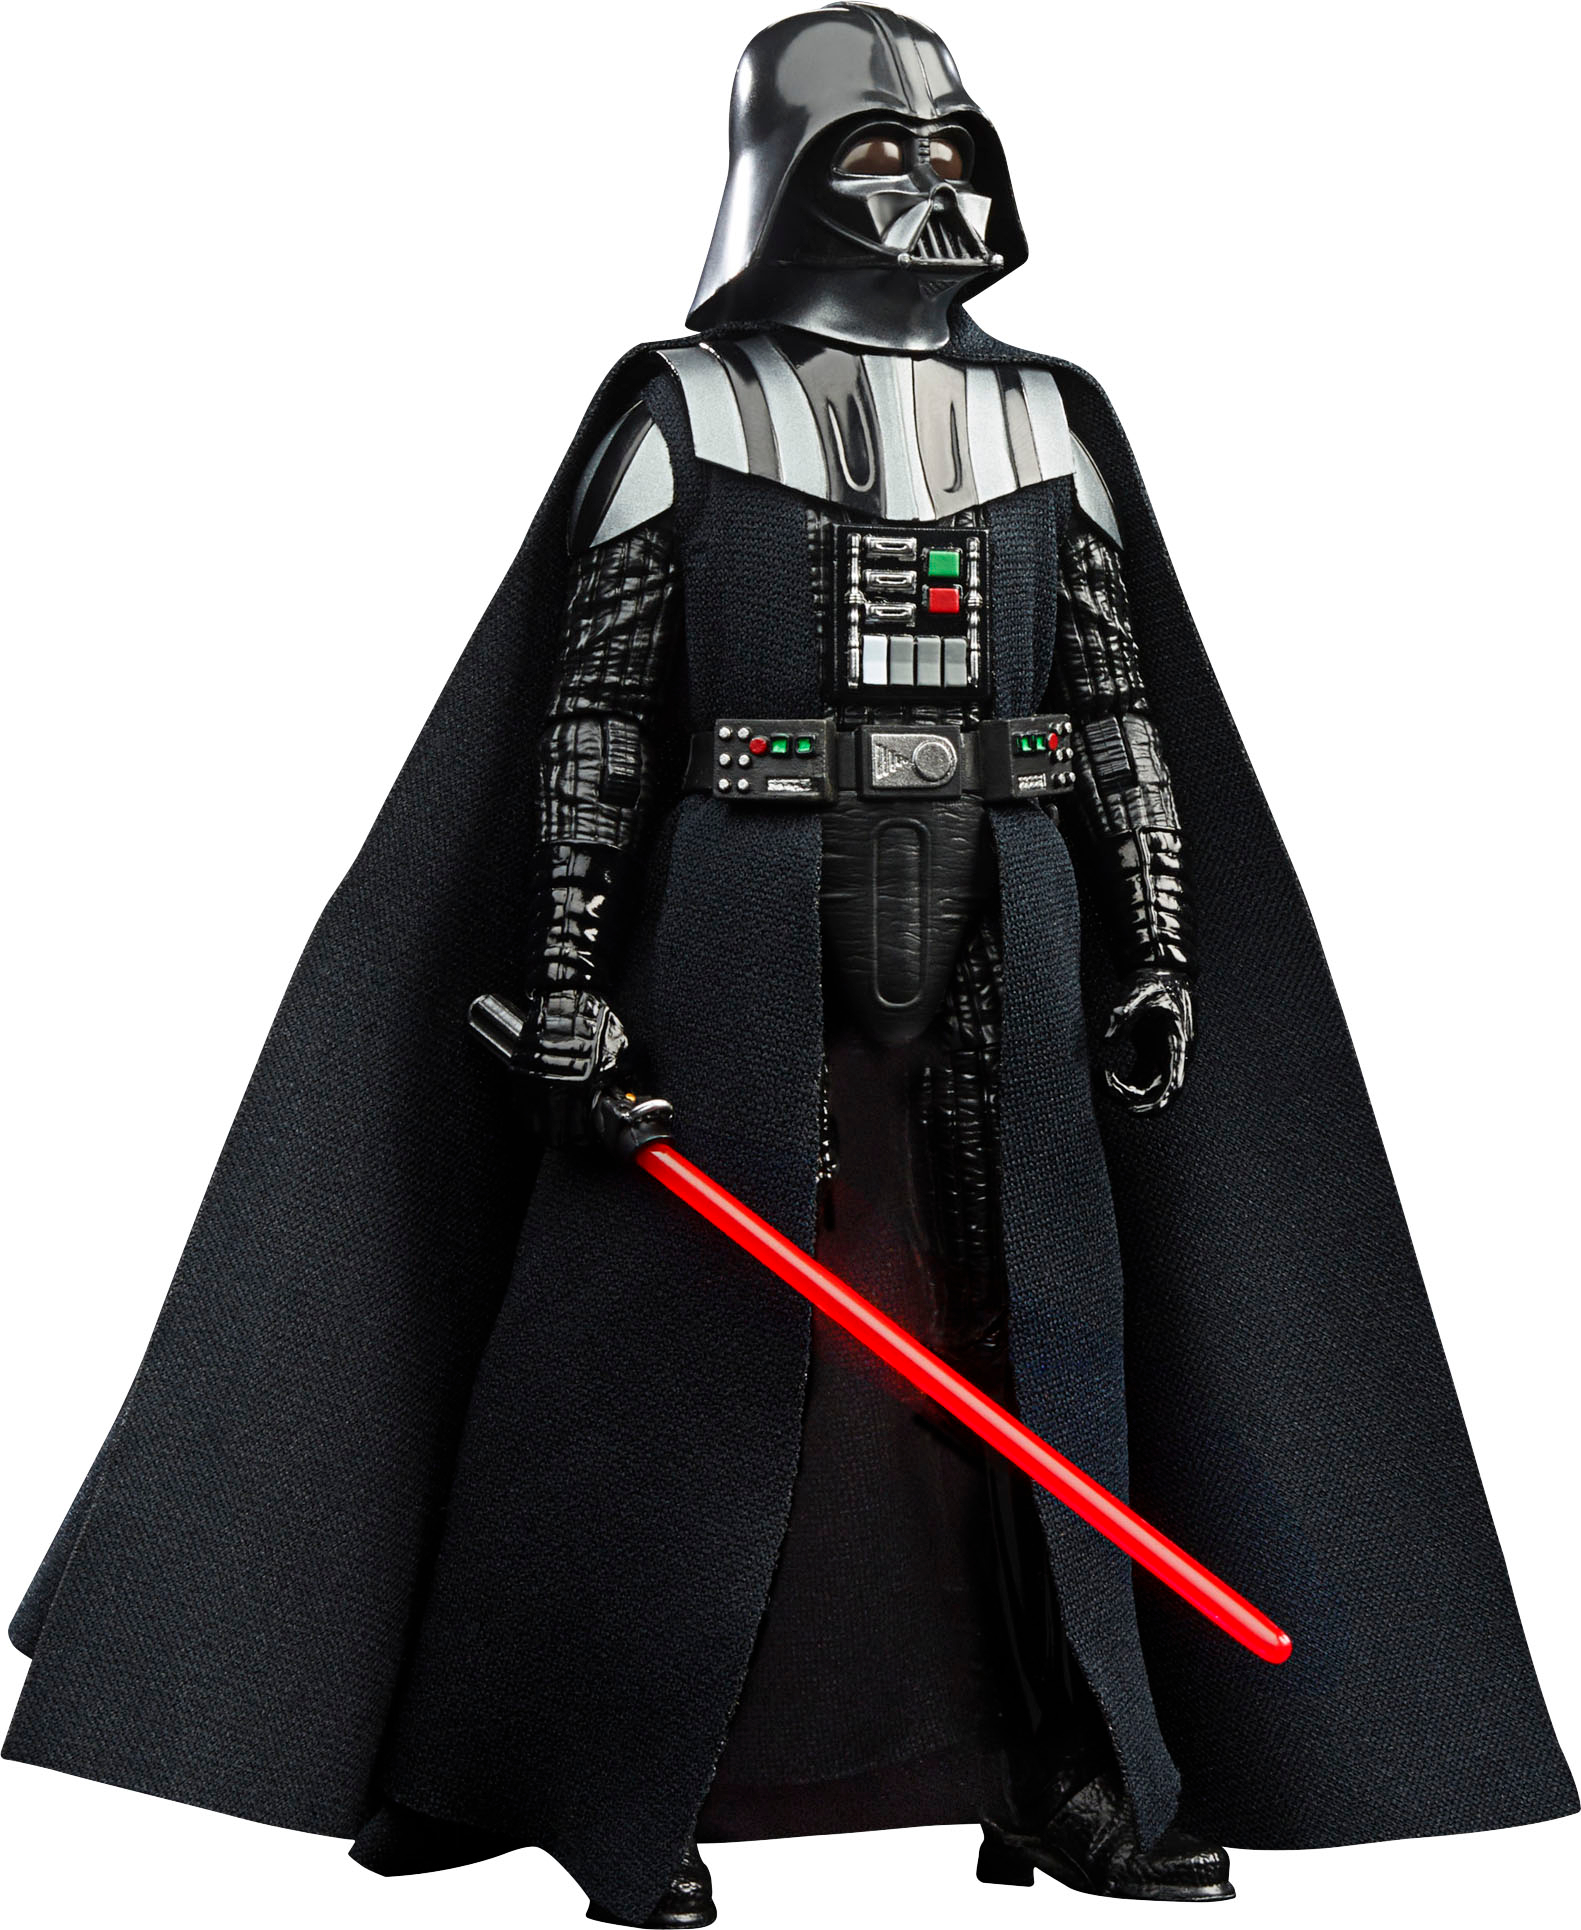 Star Wars The Black Series Darth Vader F4359 - Best Buy